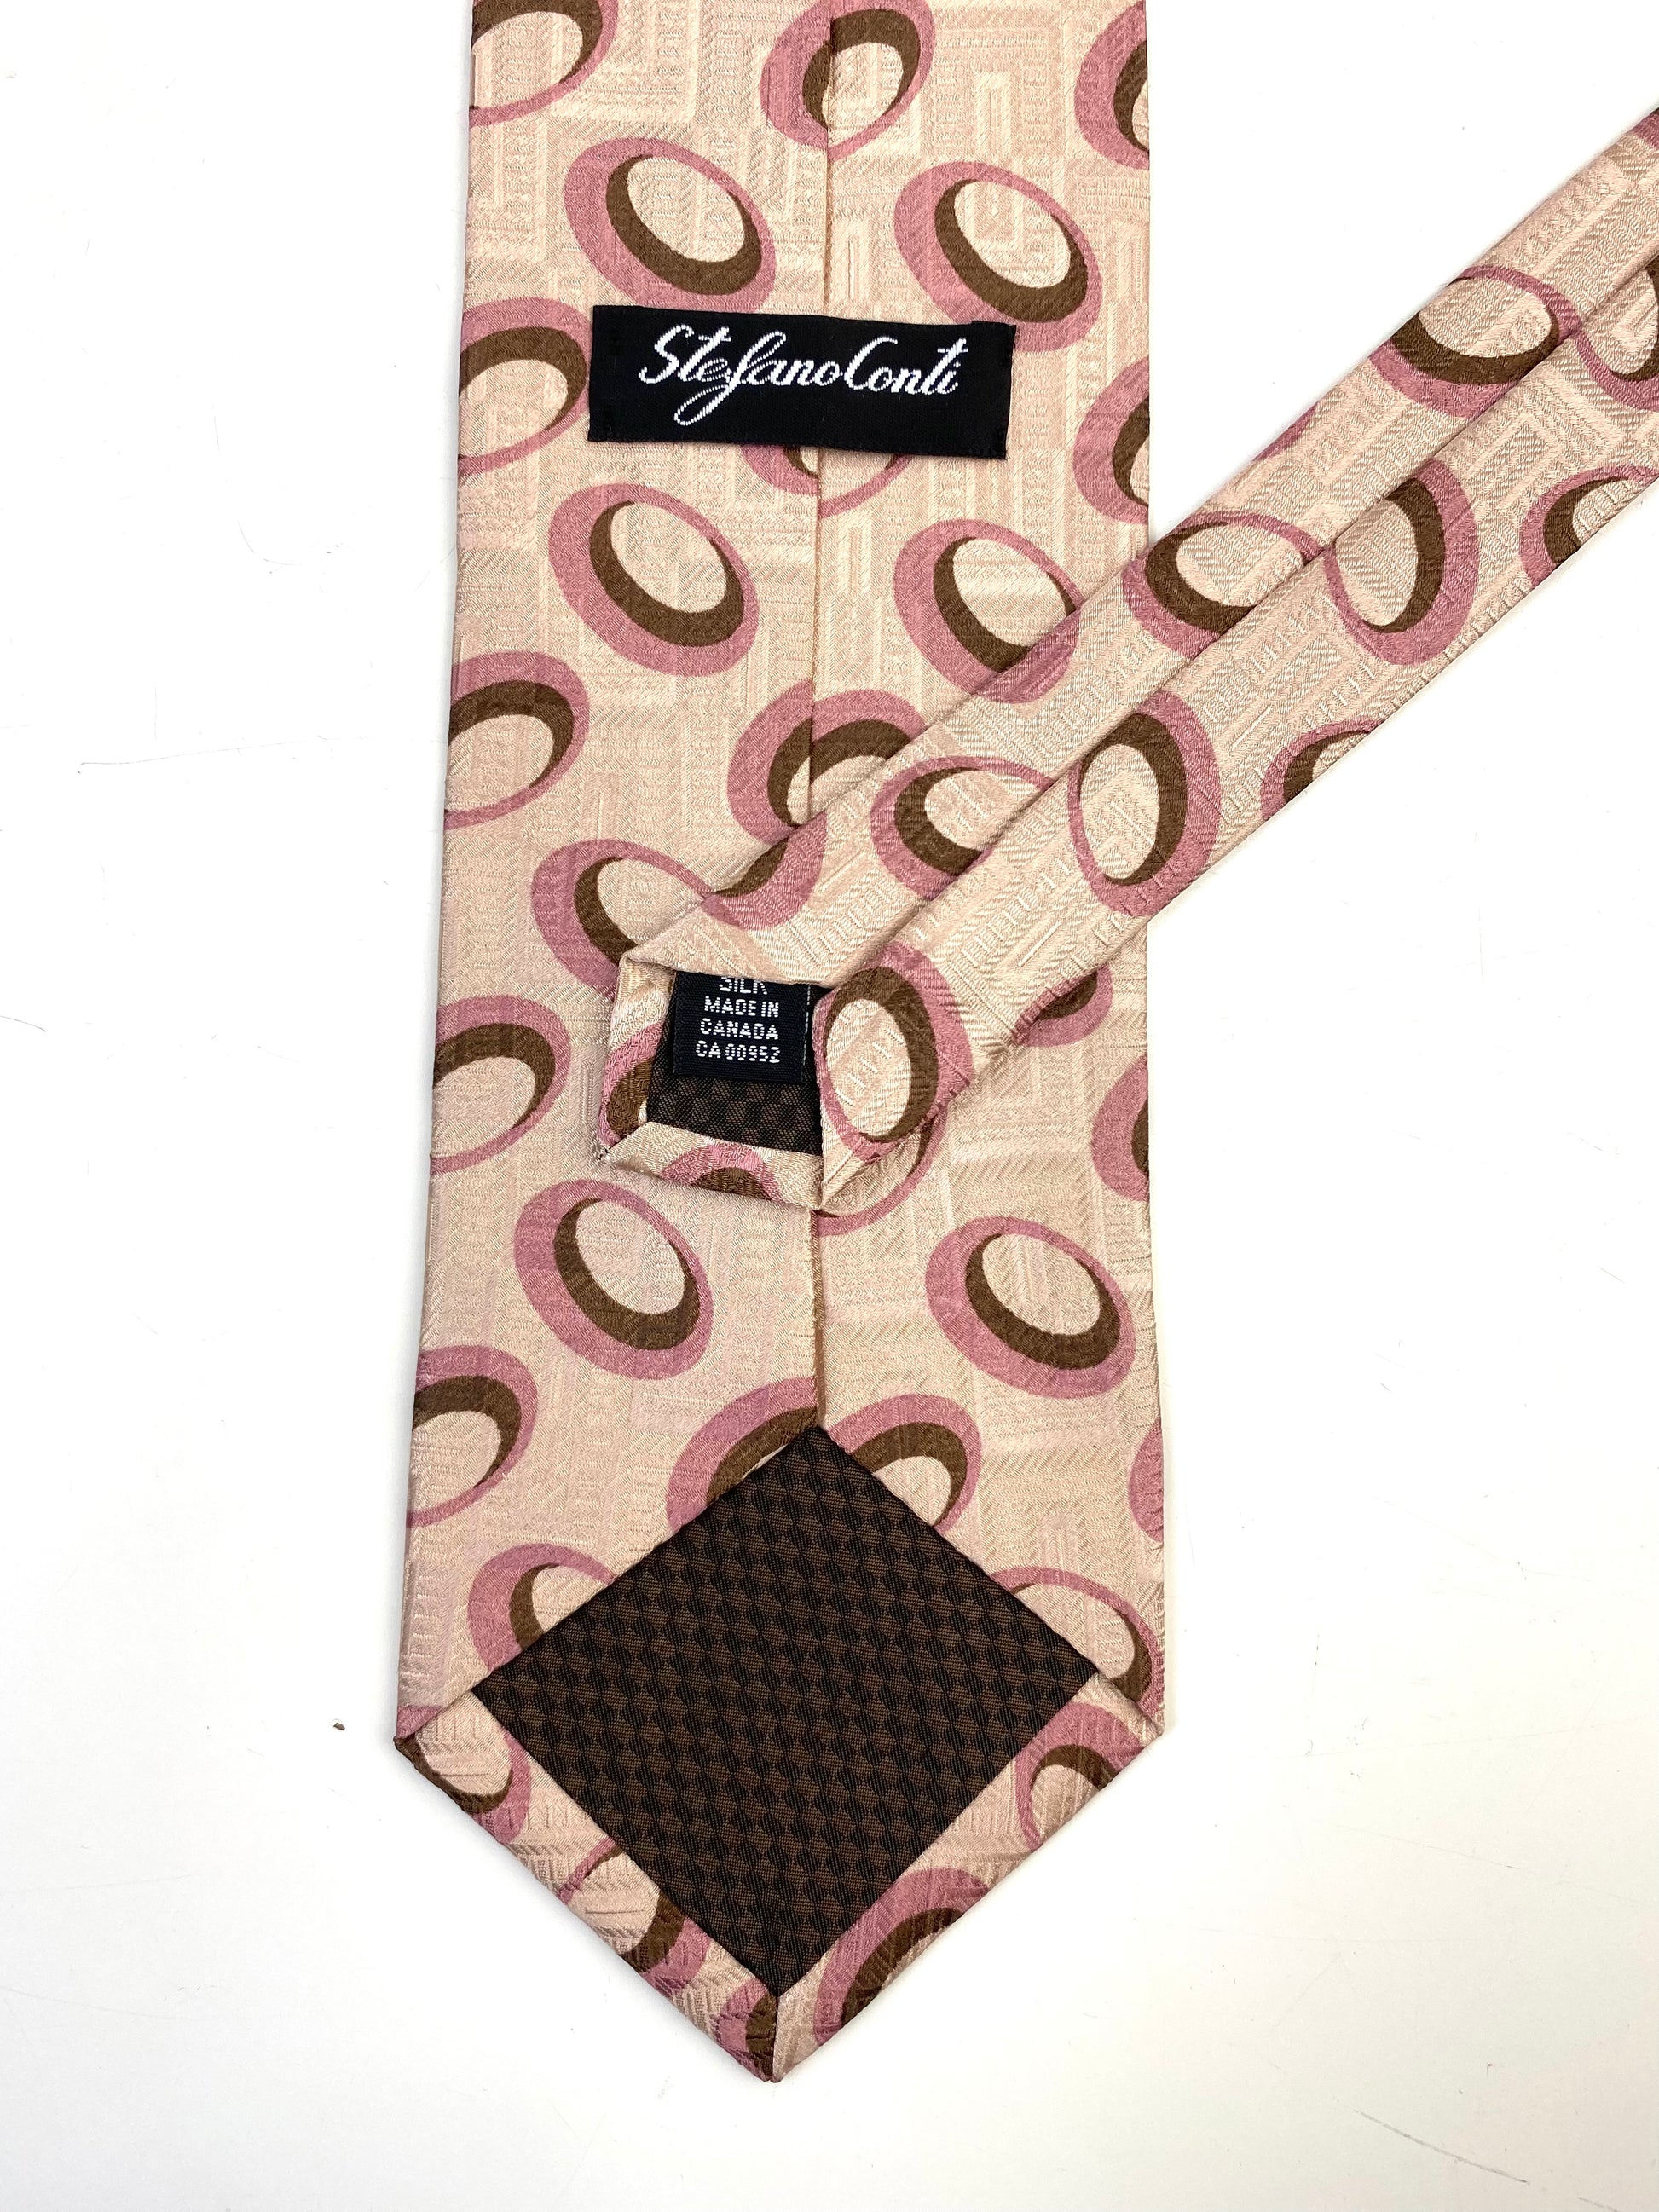 90s Deadstock Silk Necktie, Men's Vintage Pink Geometric Oval Pattern Tie, NOS